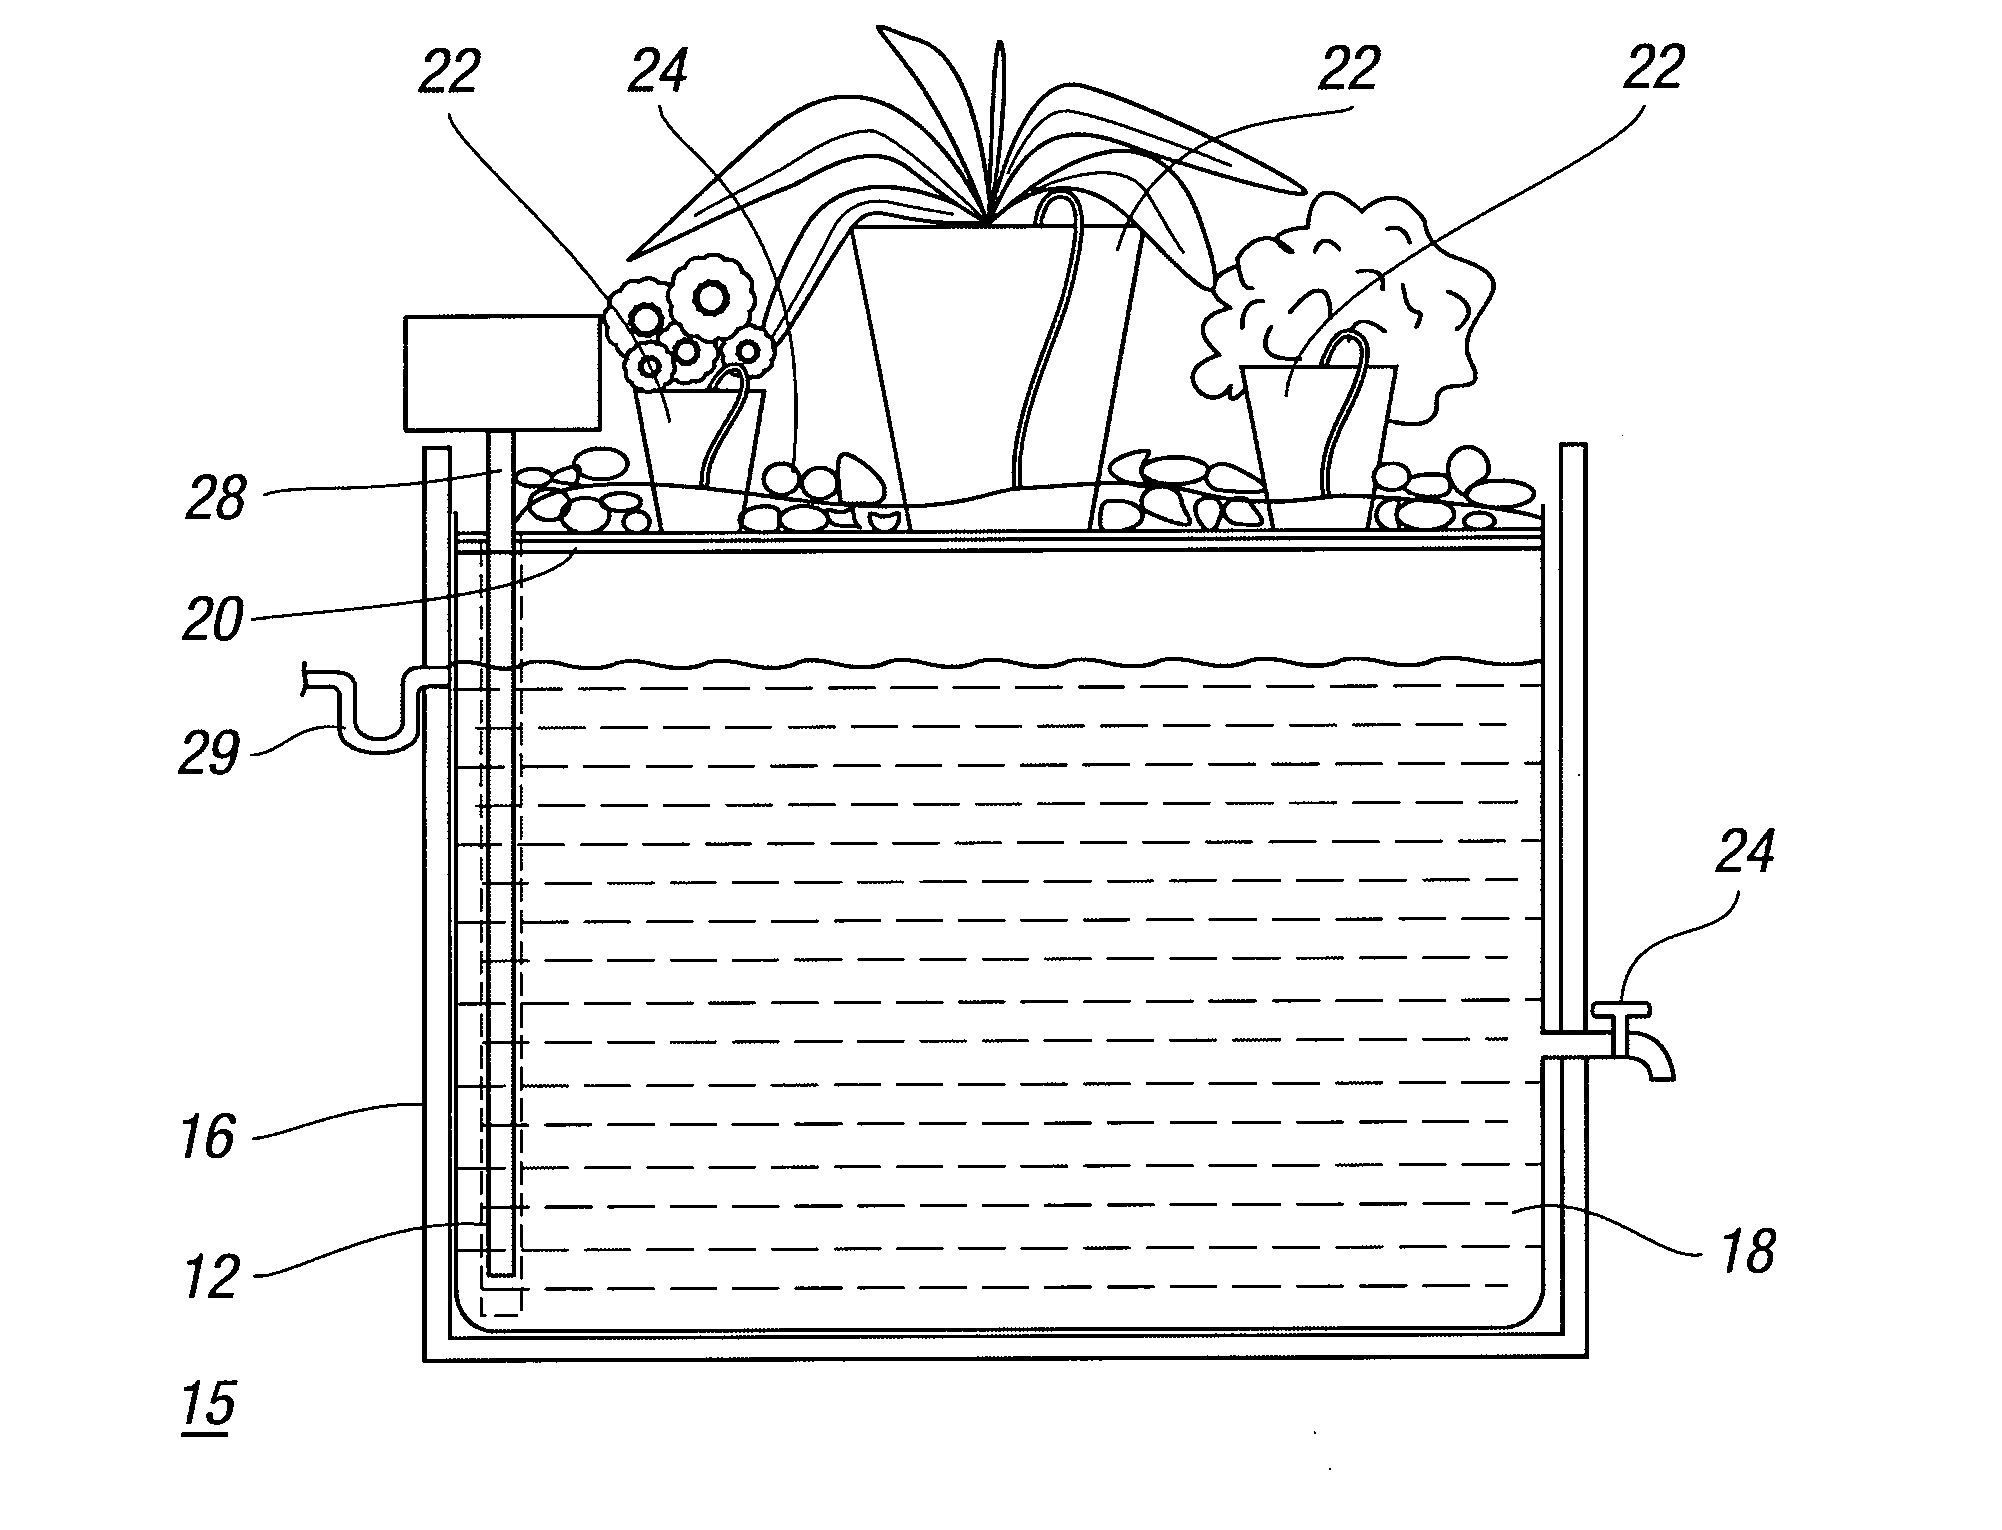 Liquid irrigation system